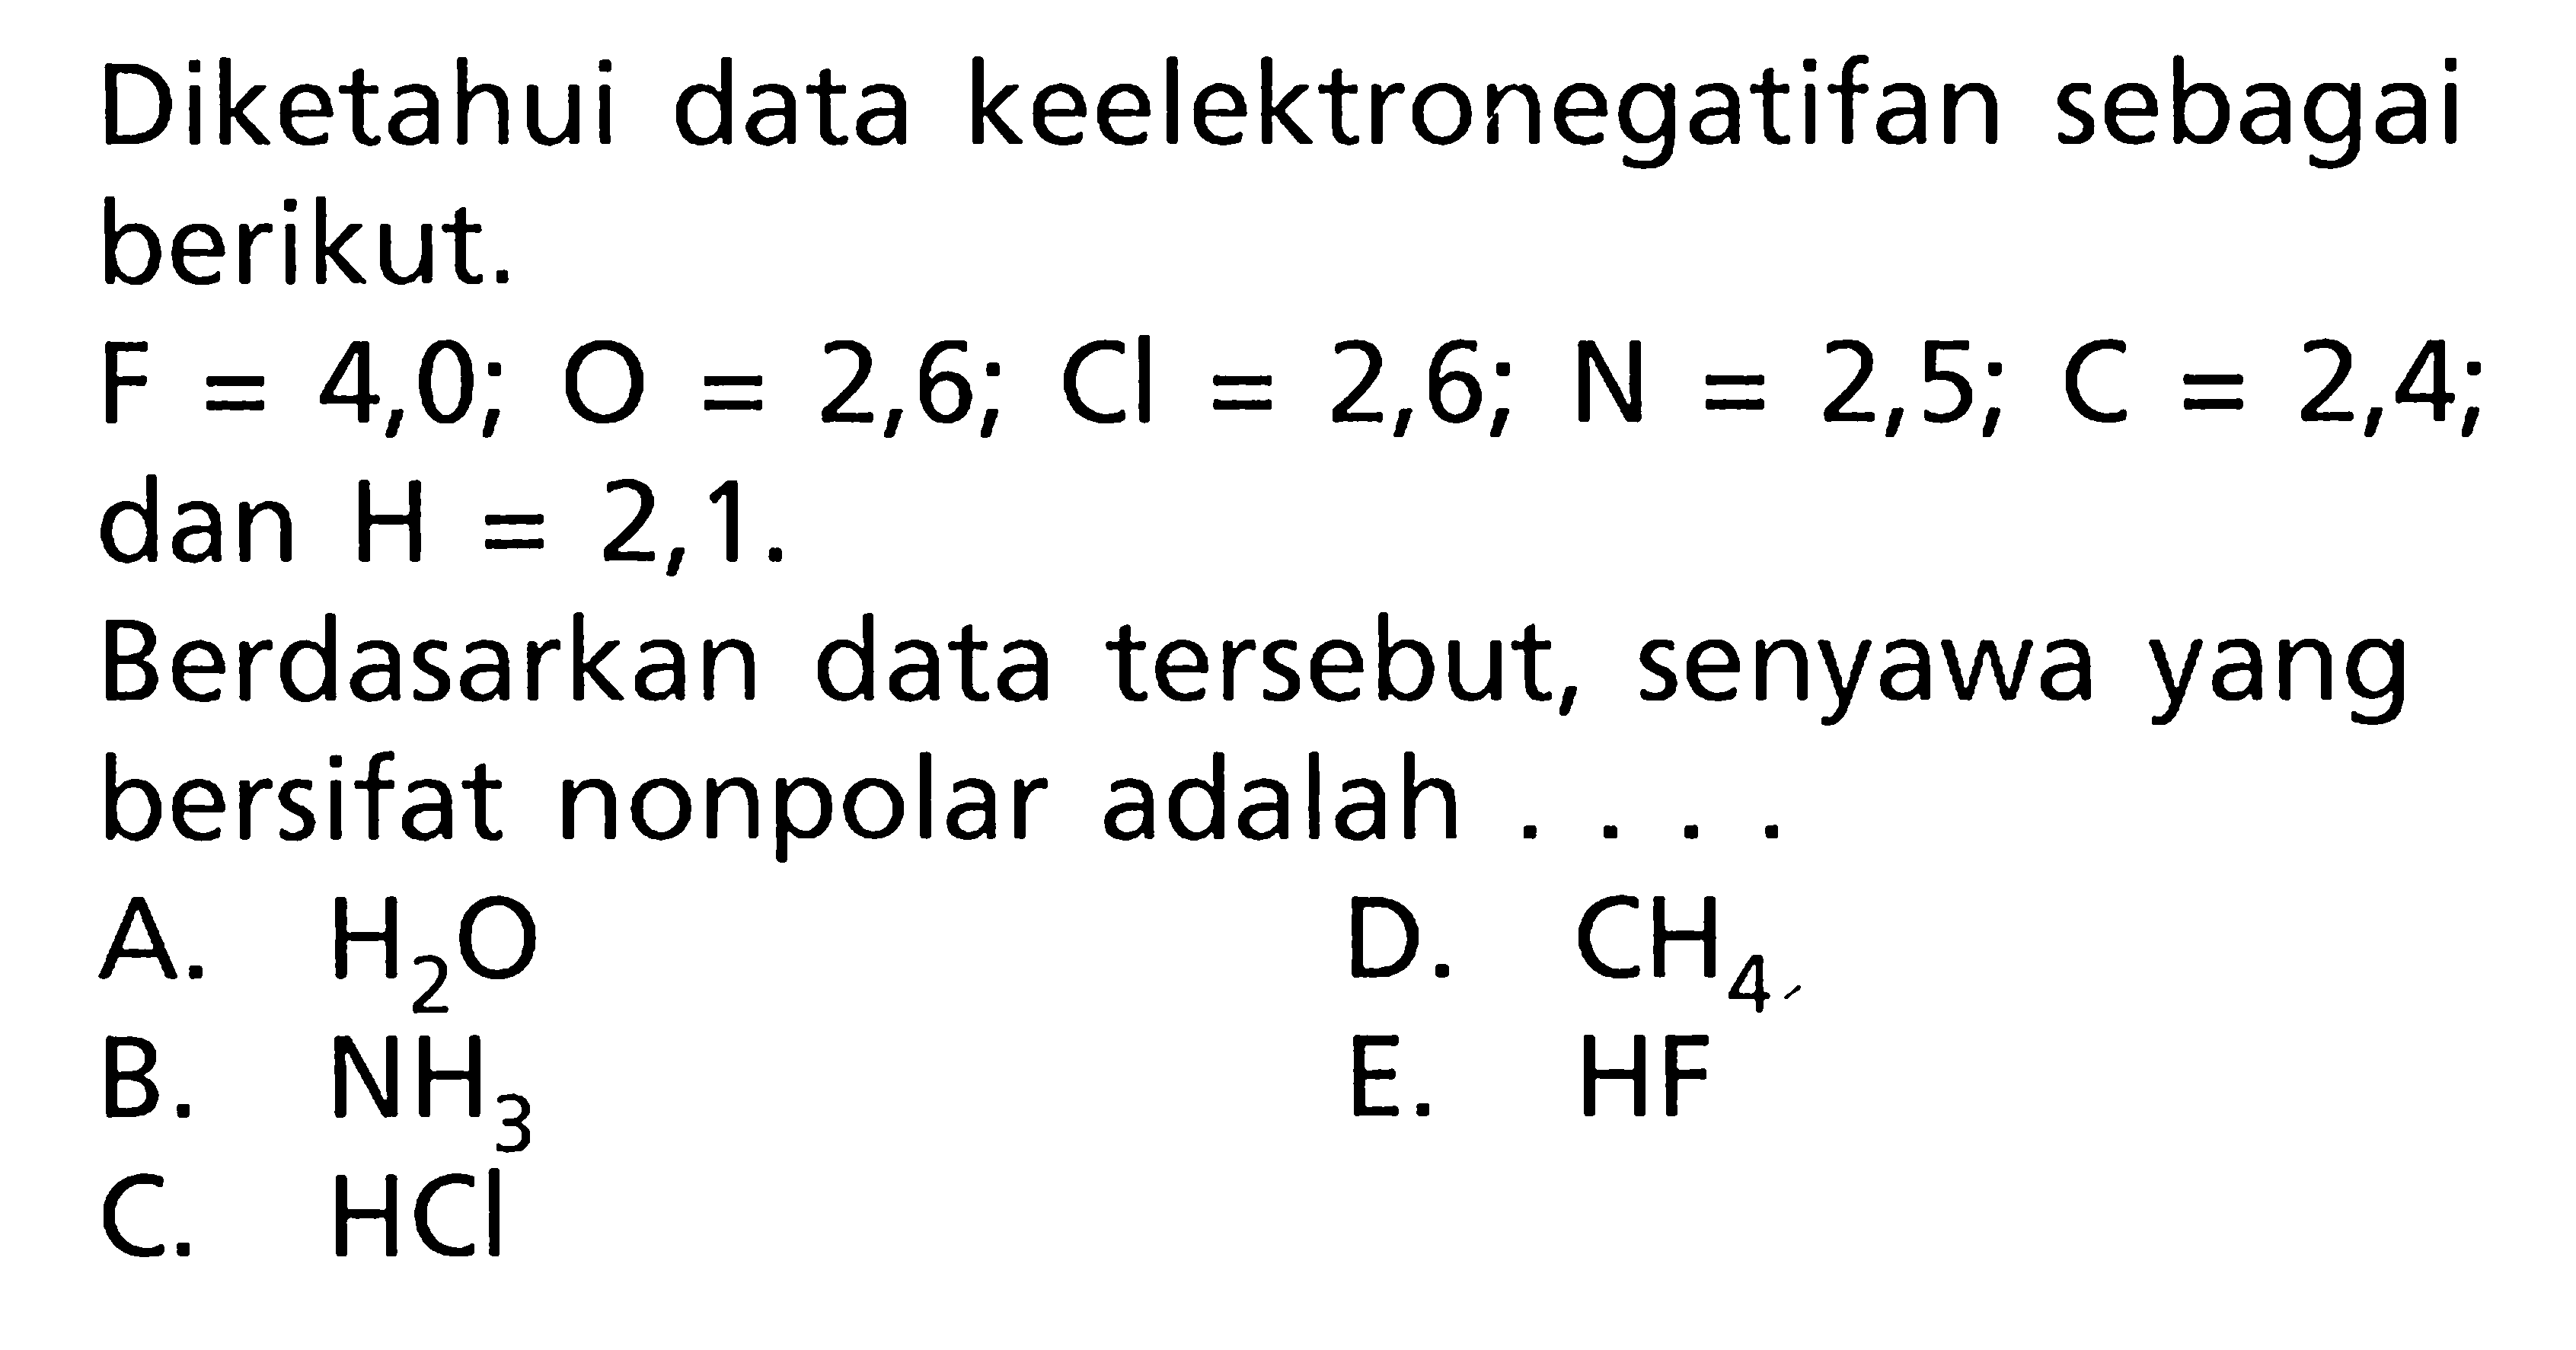 Diketahui data keelektronegatifan sebagai berikut. F = 4,0; O = 2,6; Cl = 2,6; N = 2,5; C = 2,4; dan H = 2,1 . Berdasarkan data tersebut; senyawa yang bersifat nonpolar adalah ....